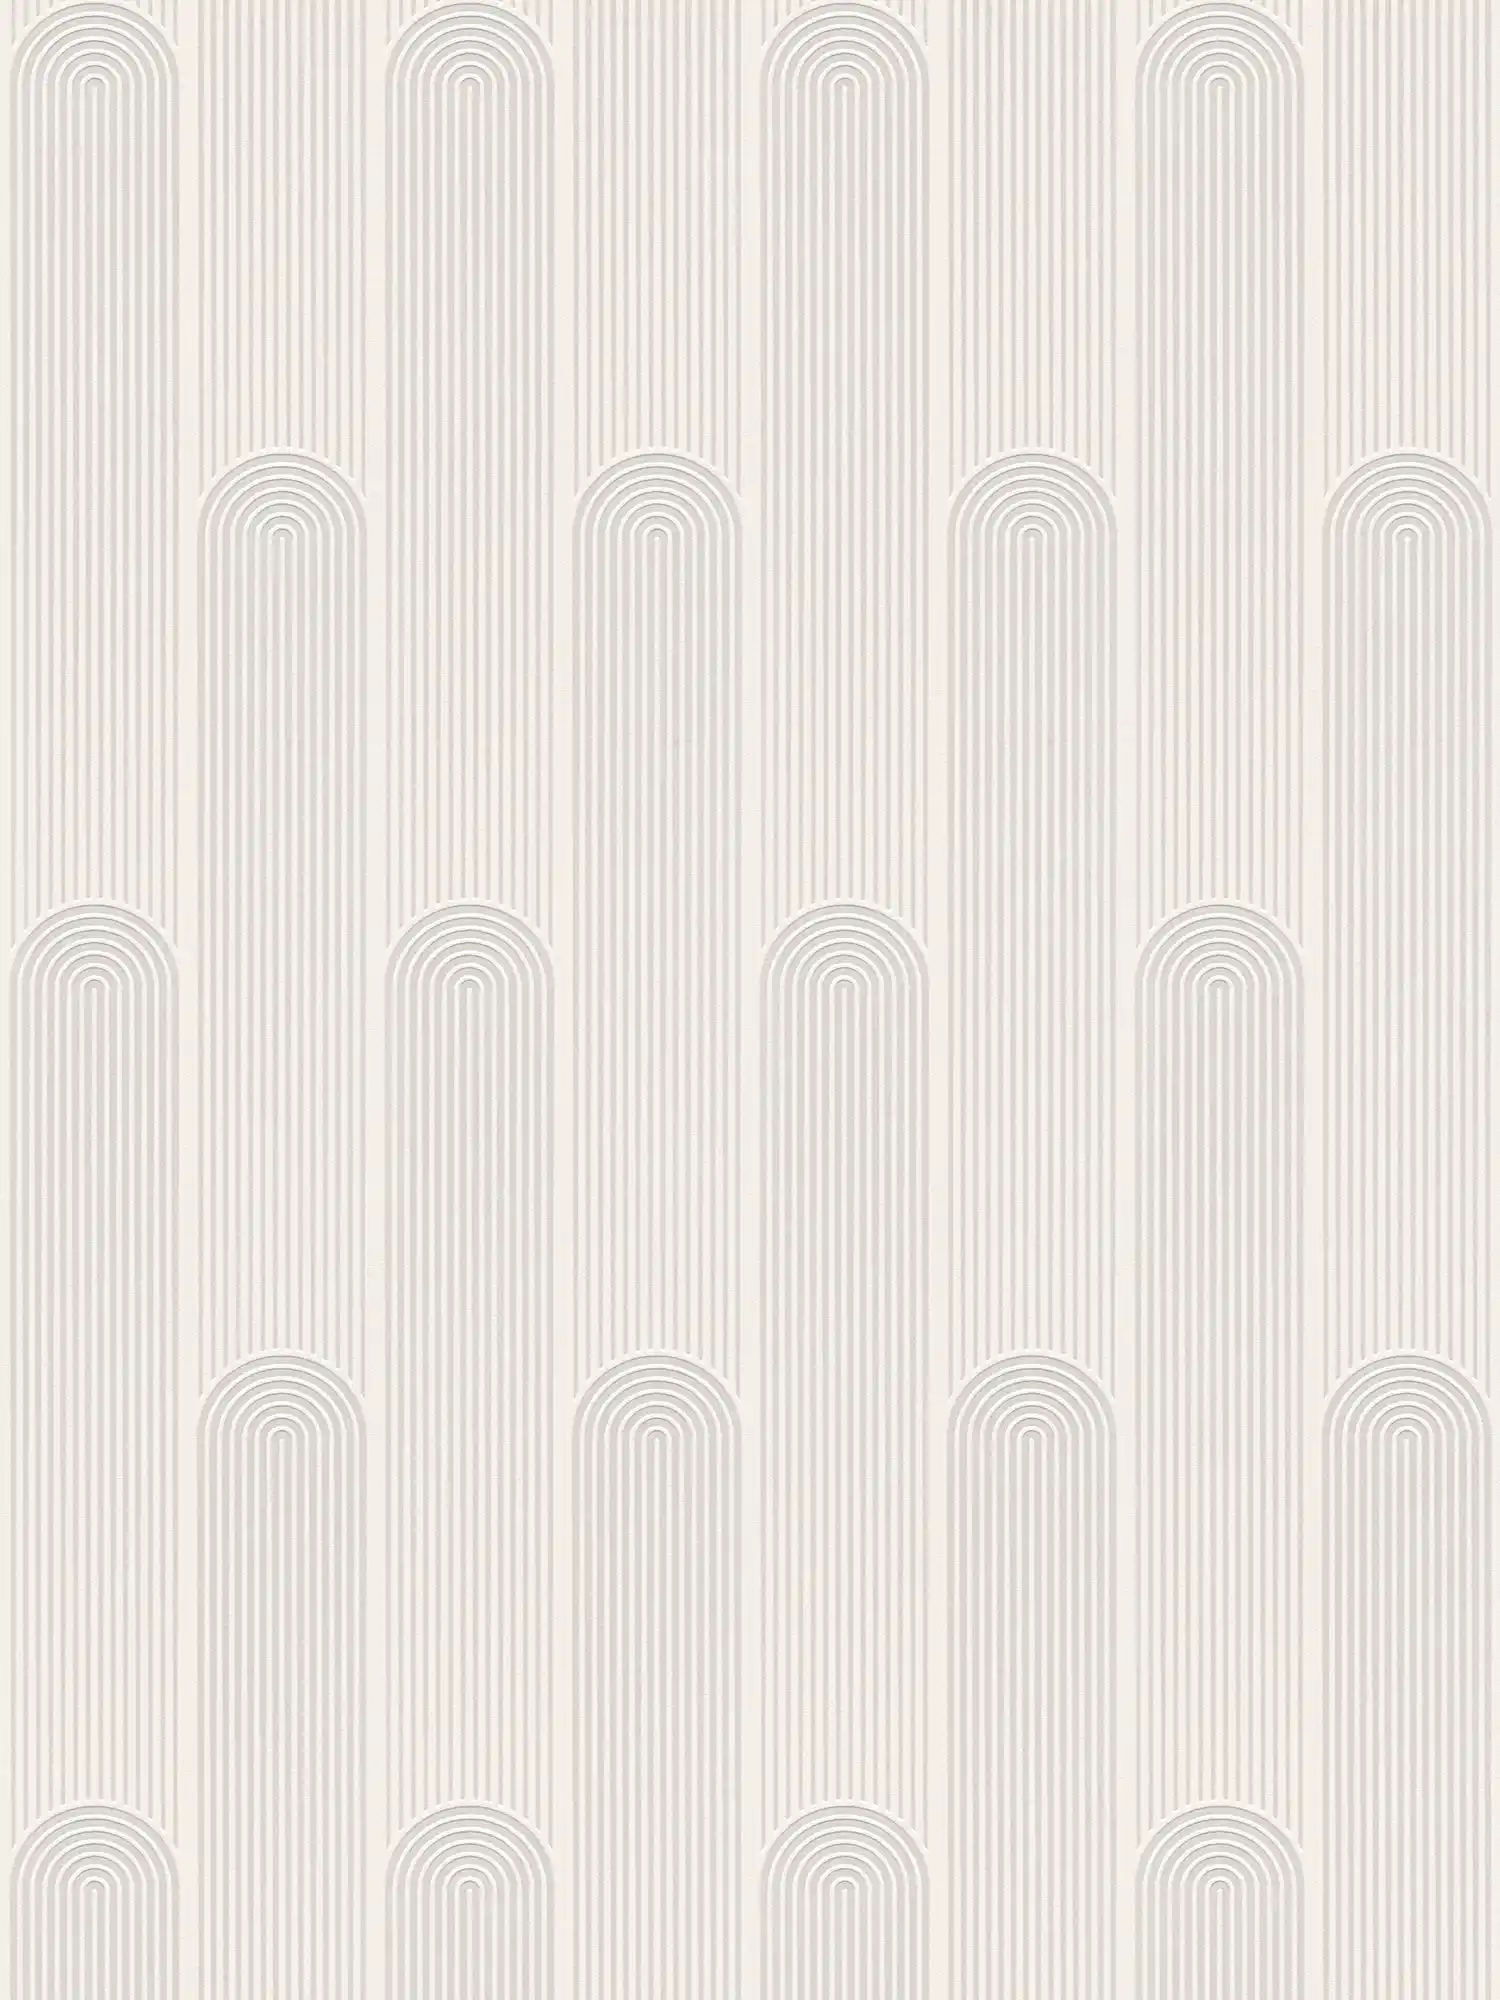 Pattern wallpaper retro art deco lines design - white, grey
